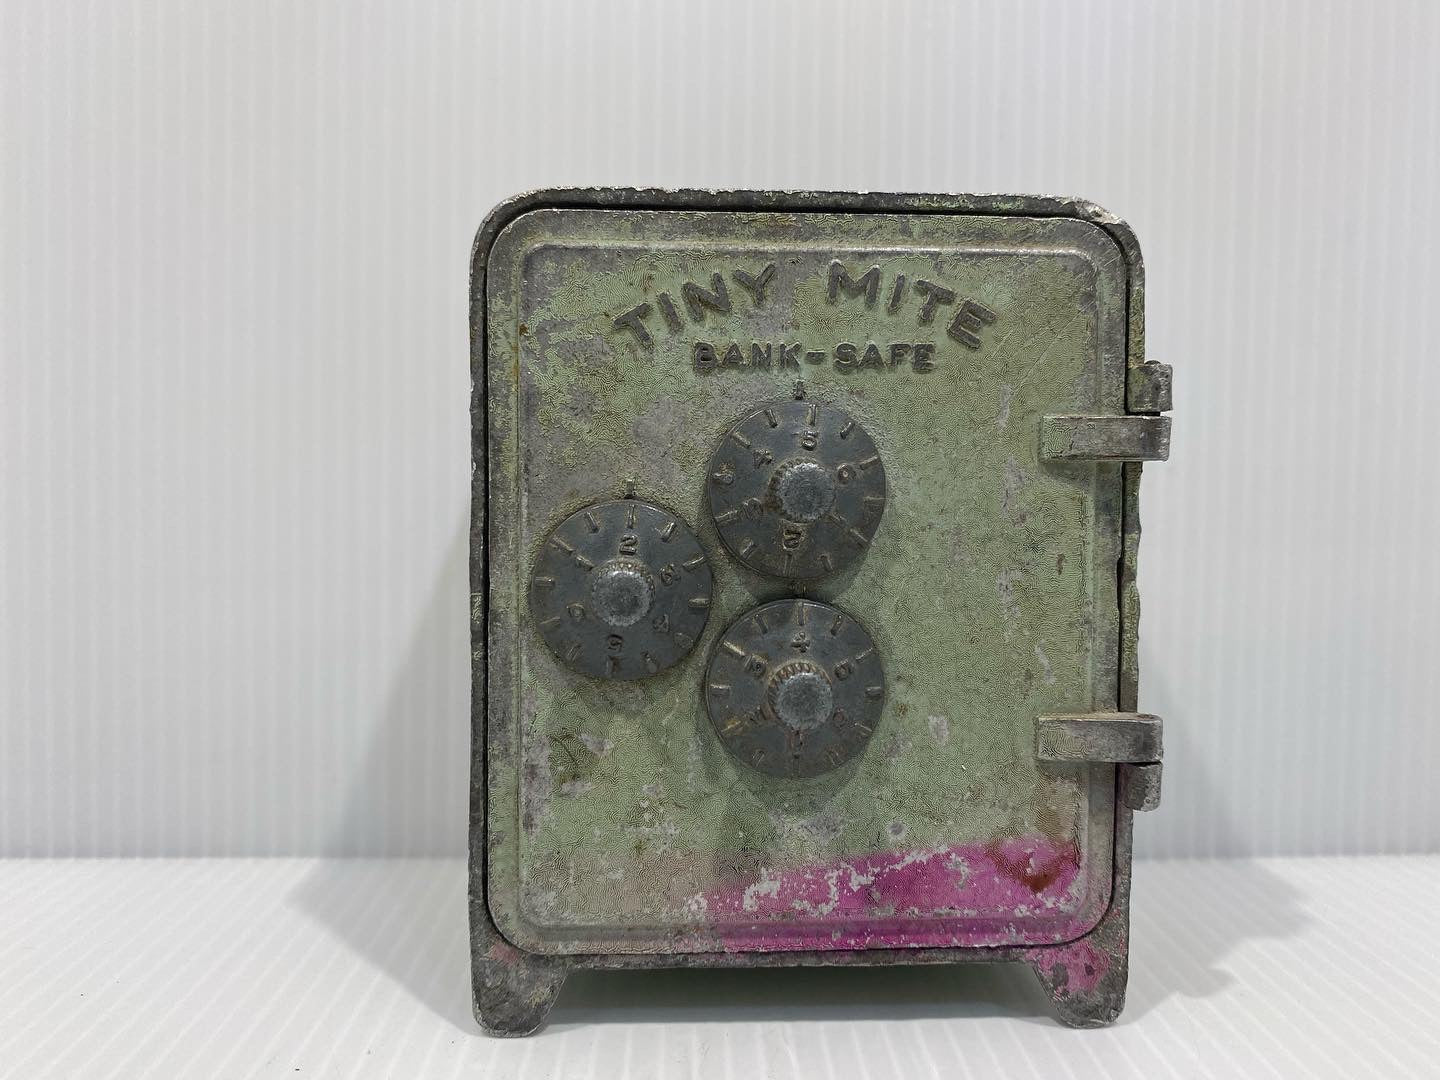 Tiny Mite Bank Safe Cast Iron Bank